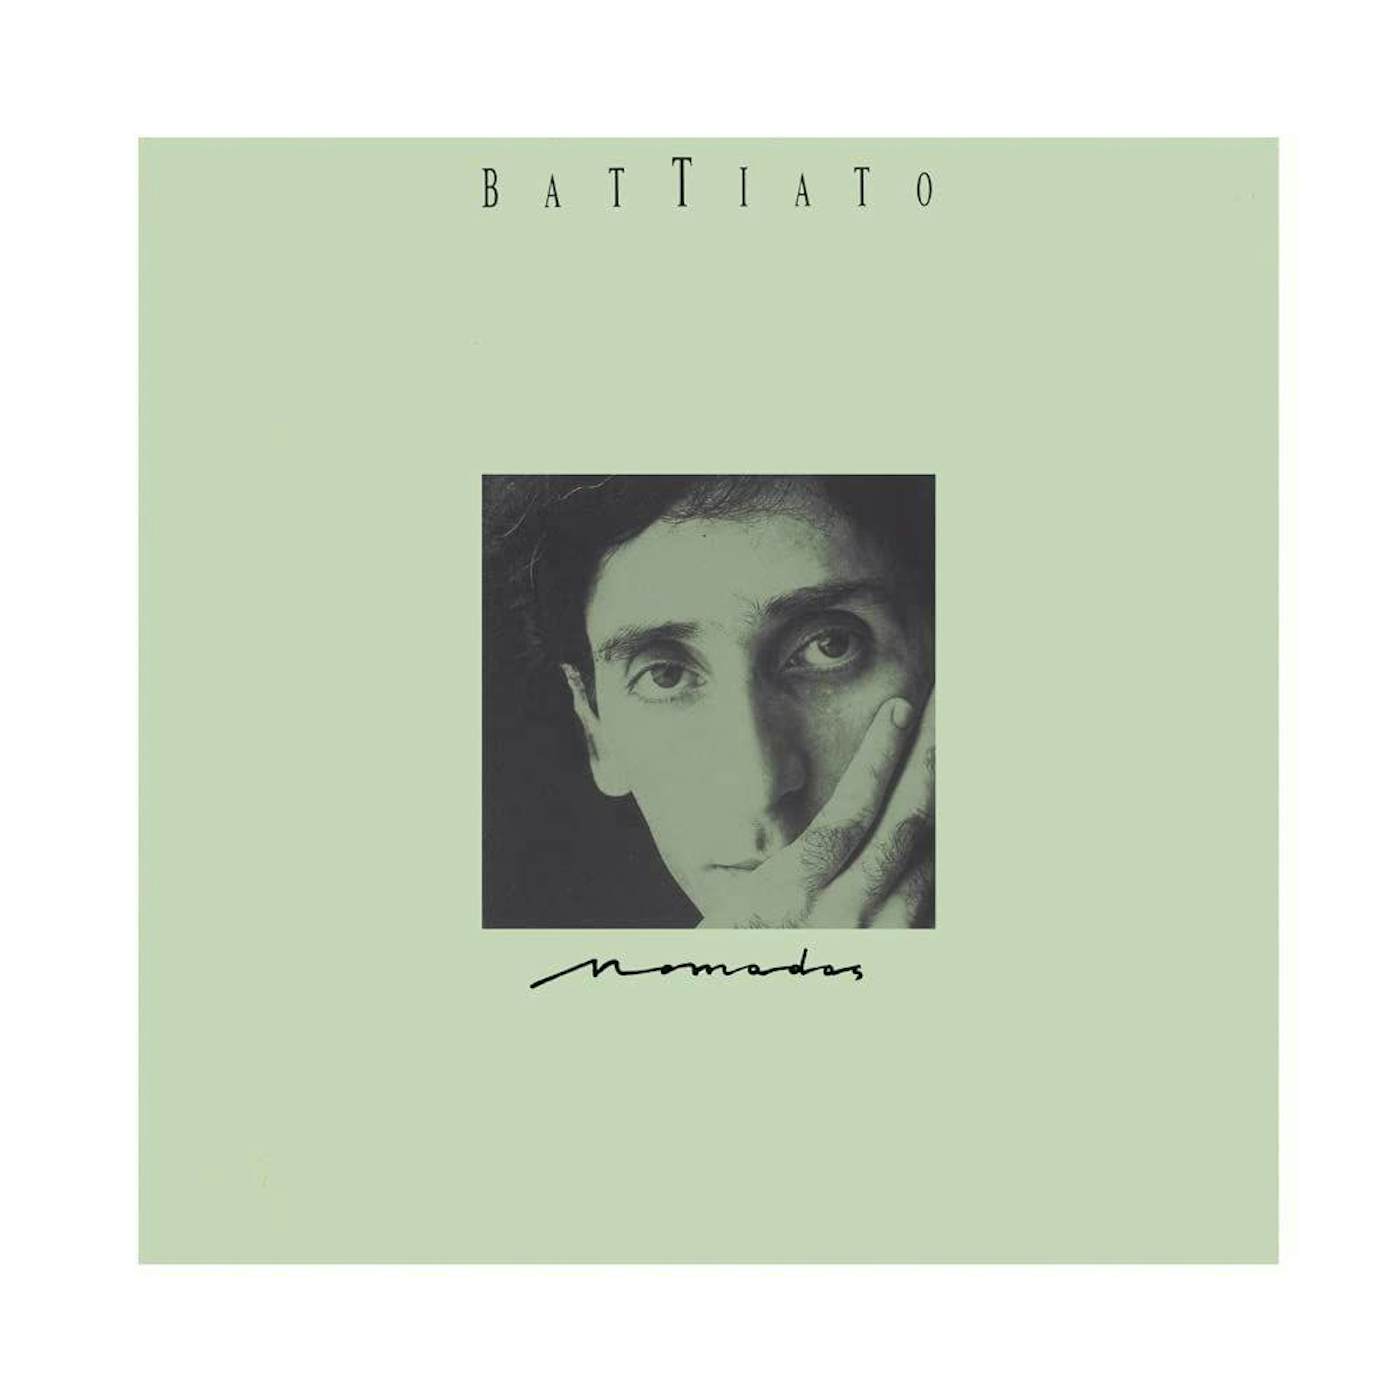 Franco Battiato Nomadas Vinyl Record